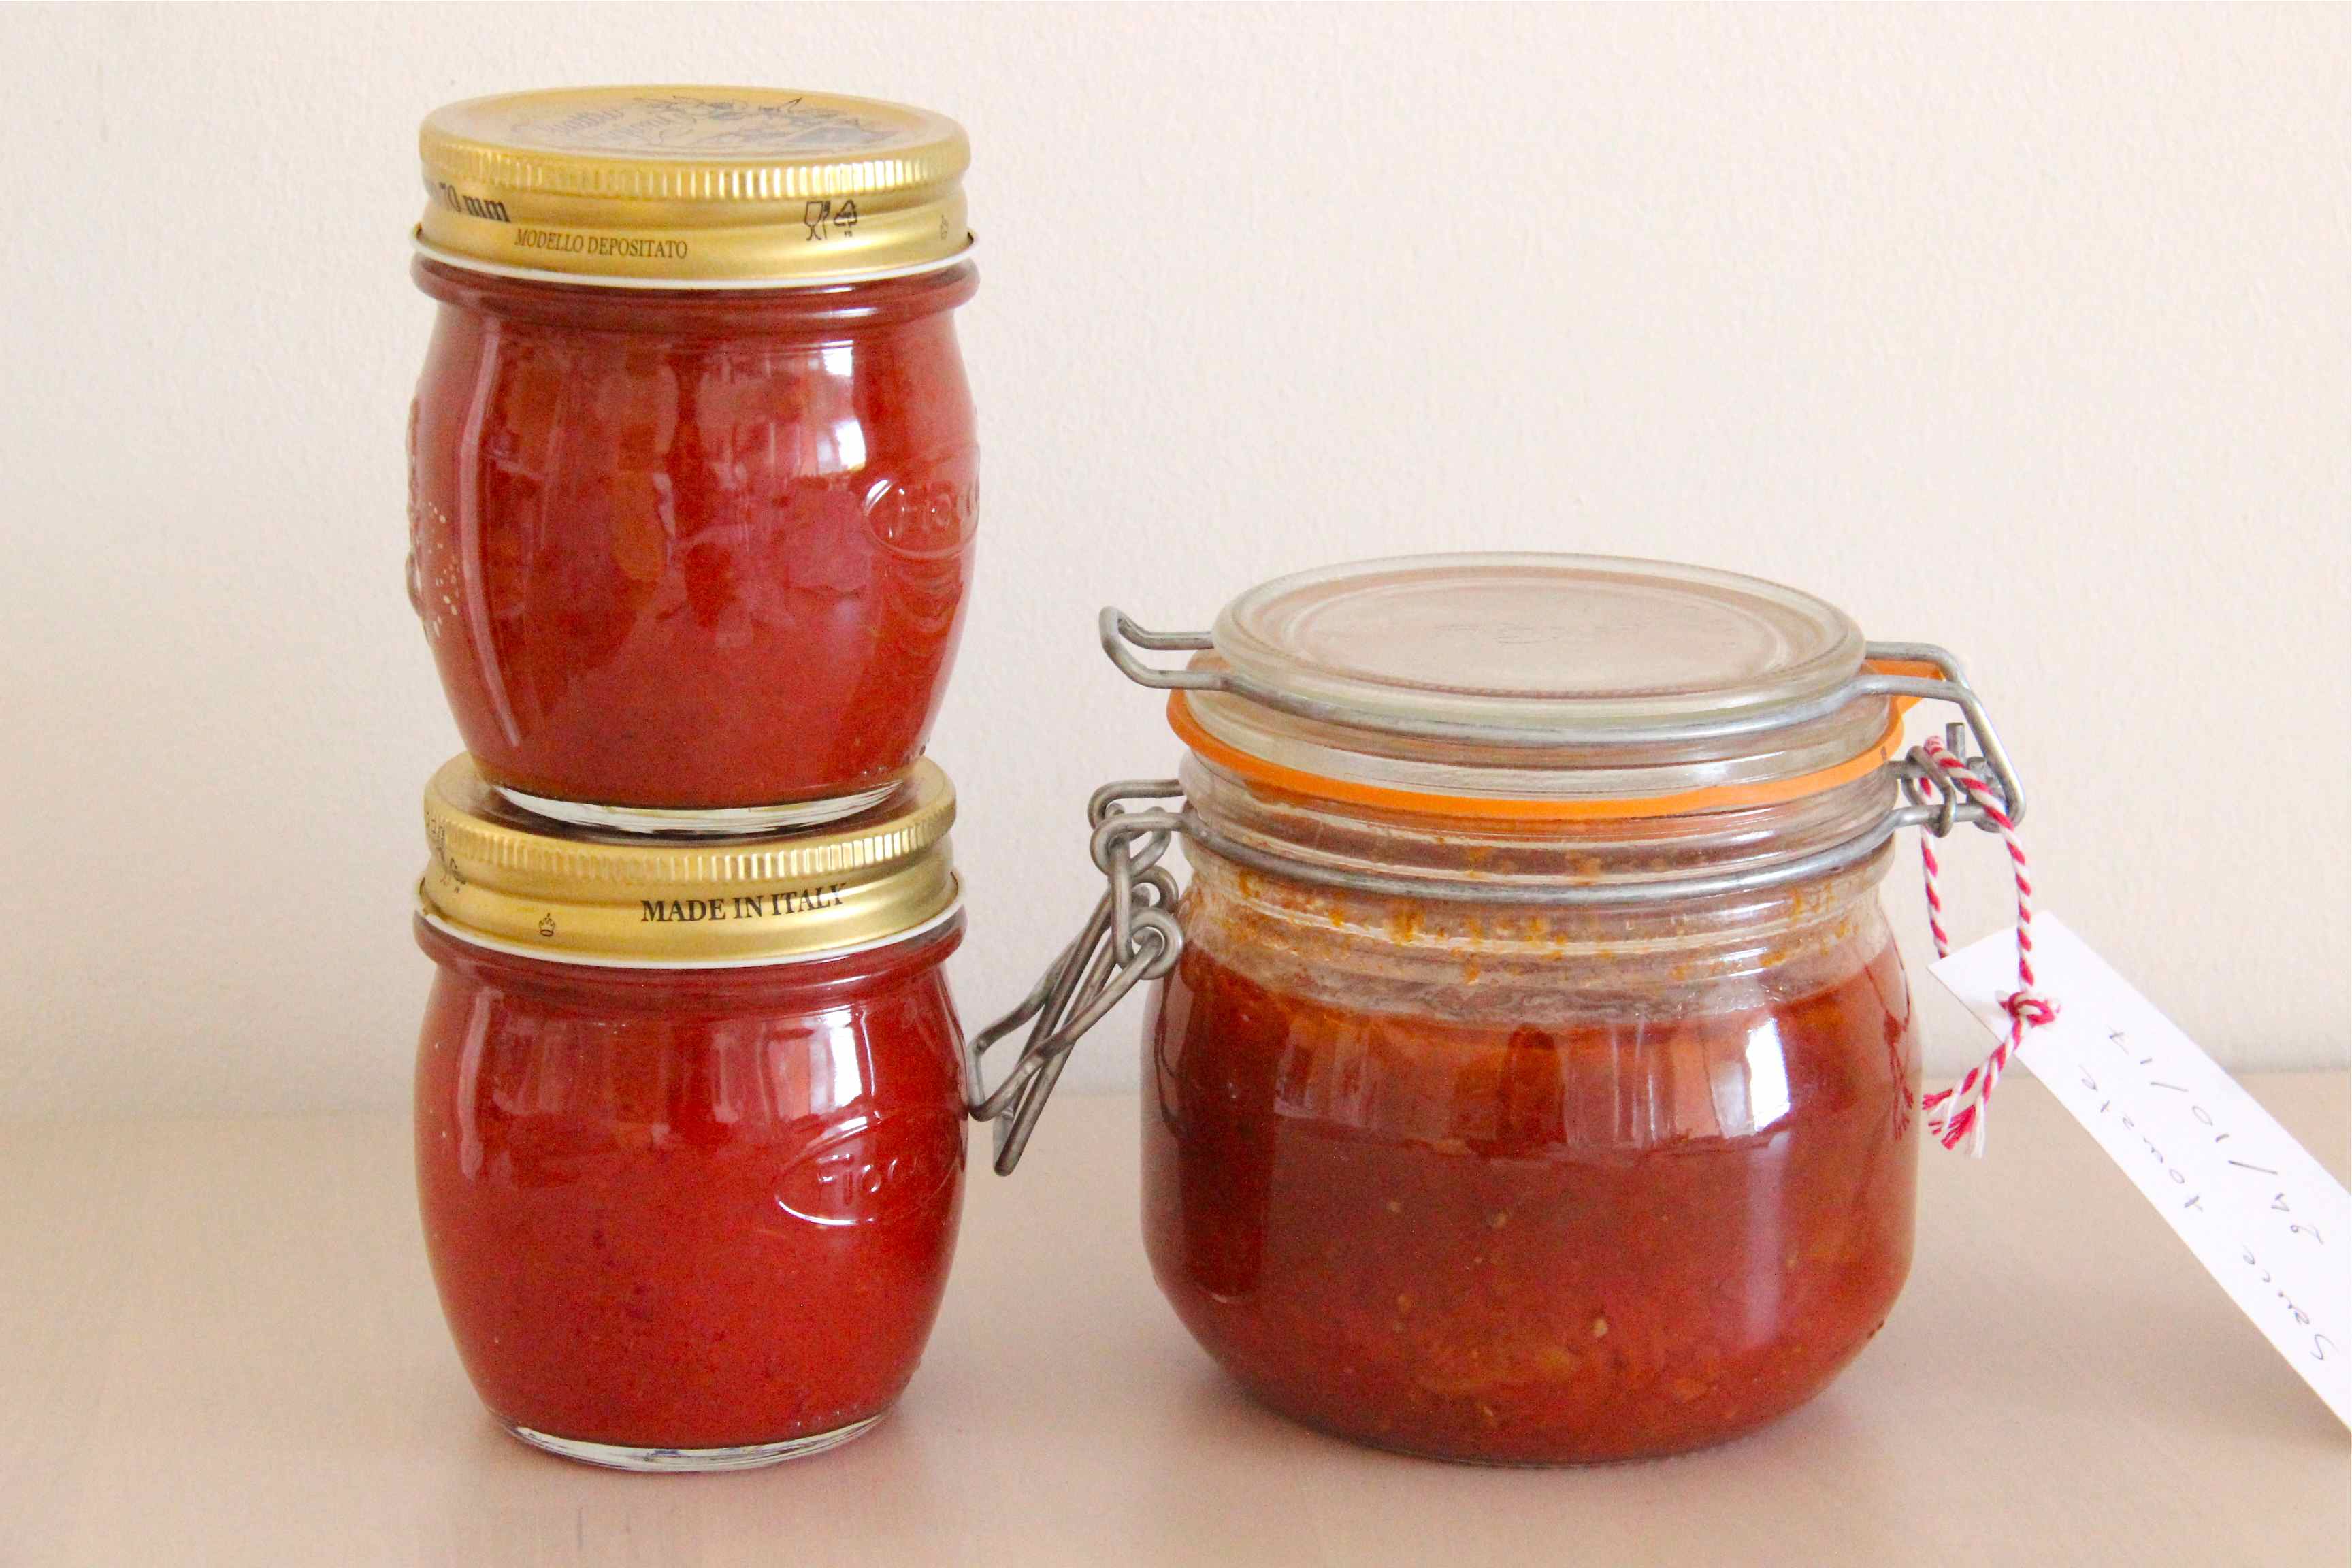 Homemade preserved tomato sauce